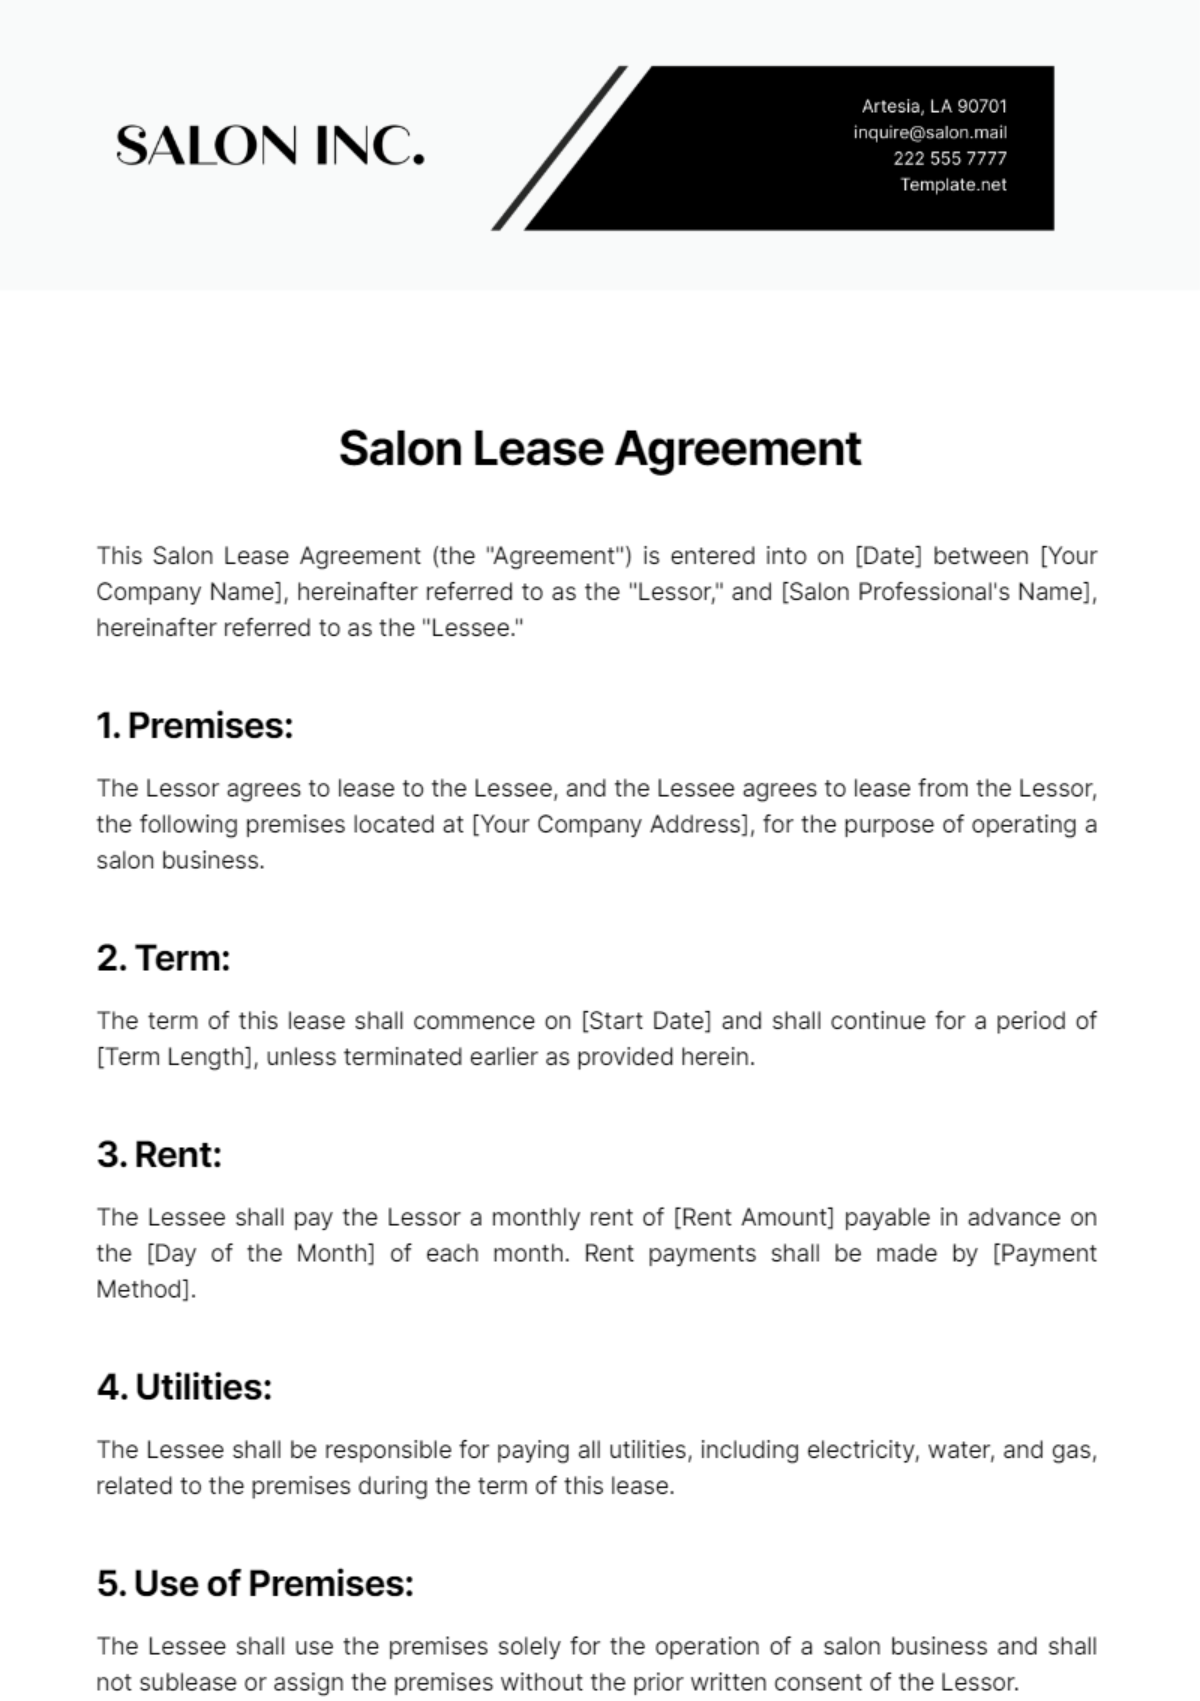 Salon Lease Agreement Template